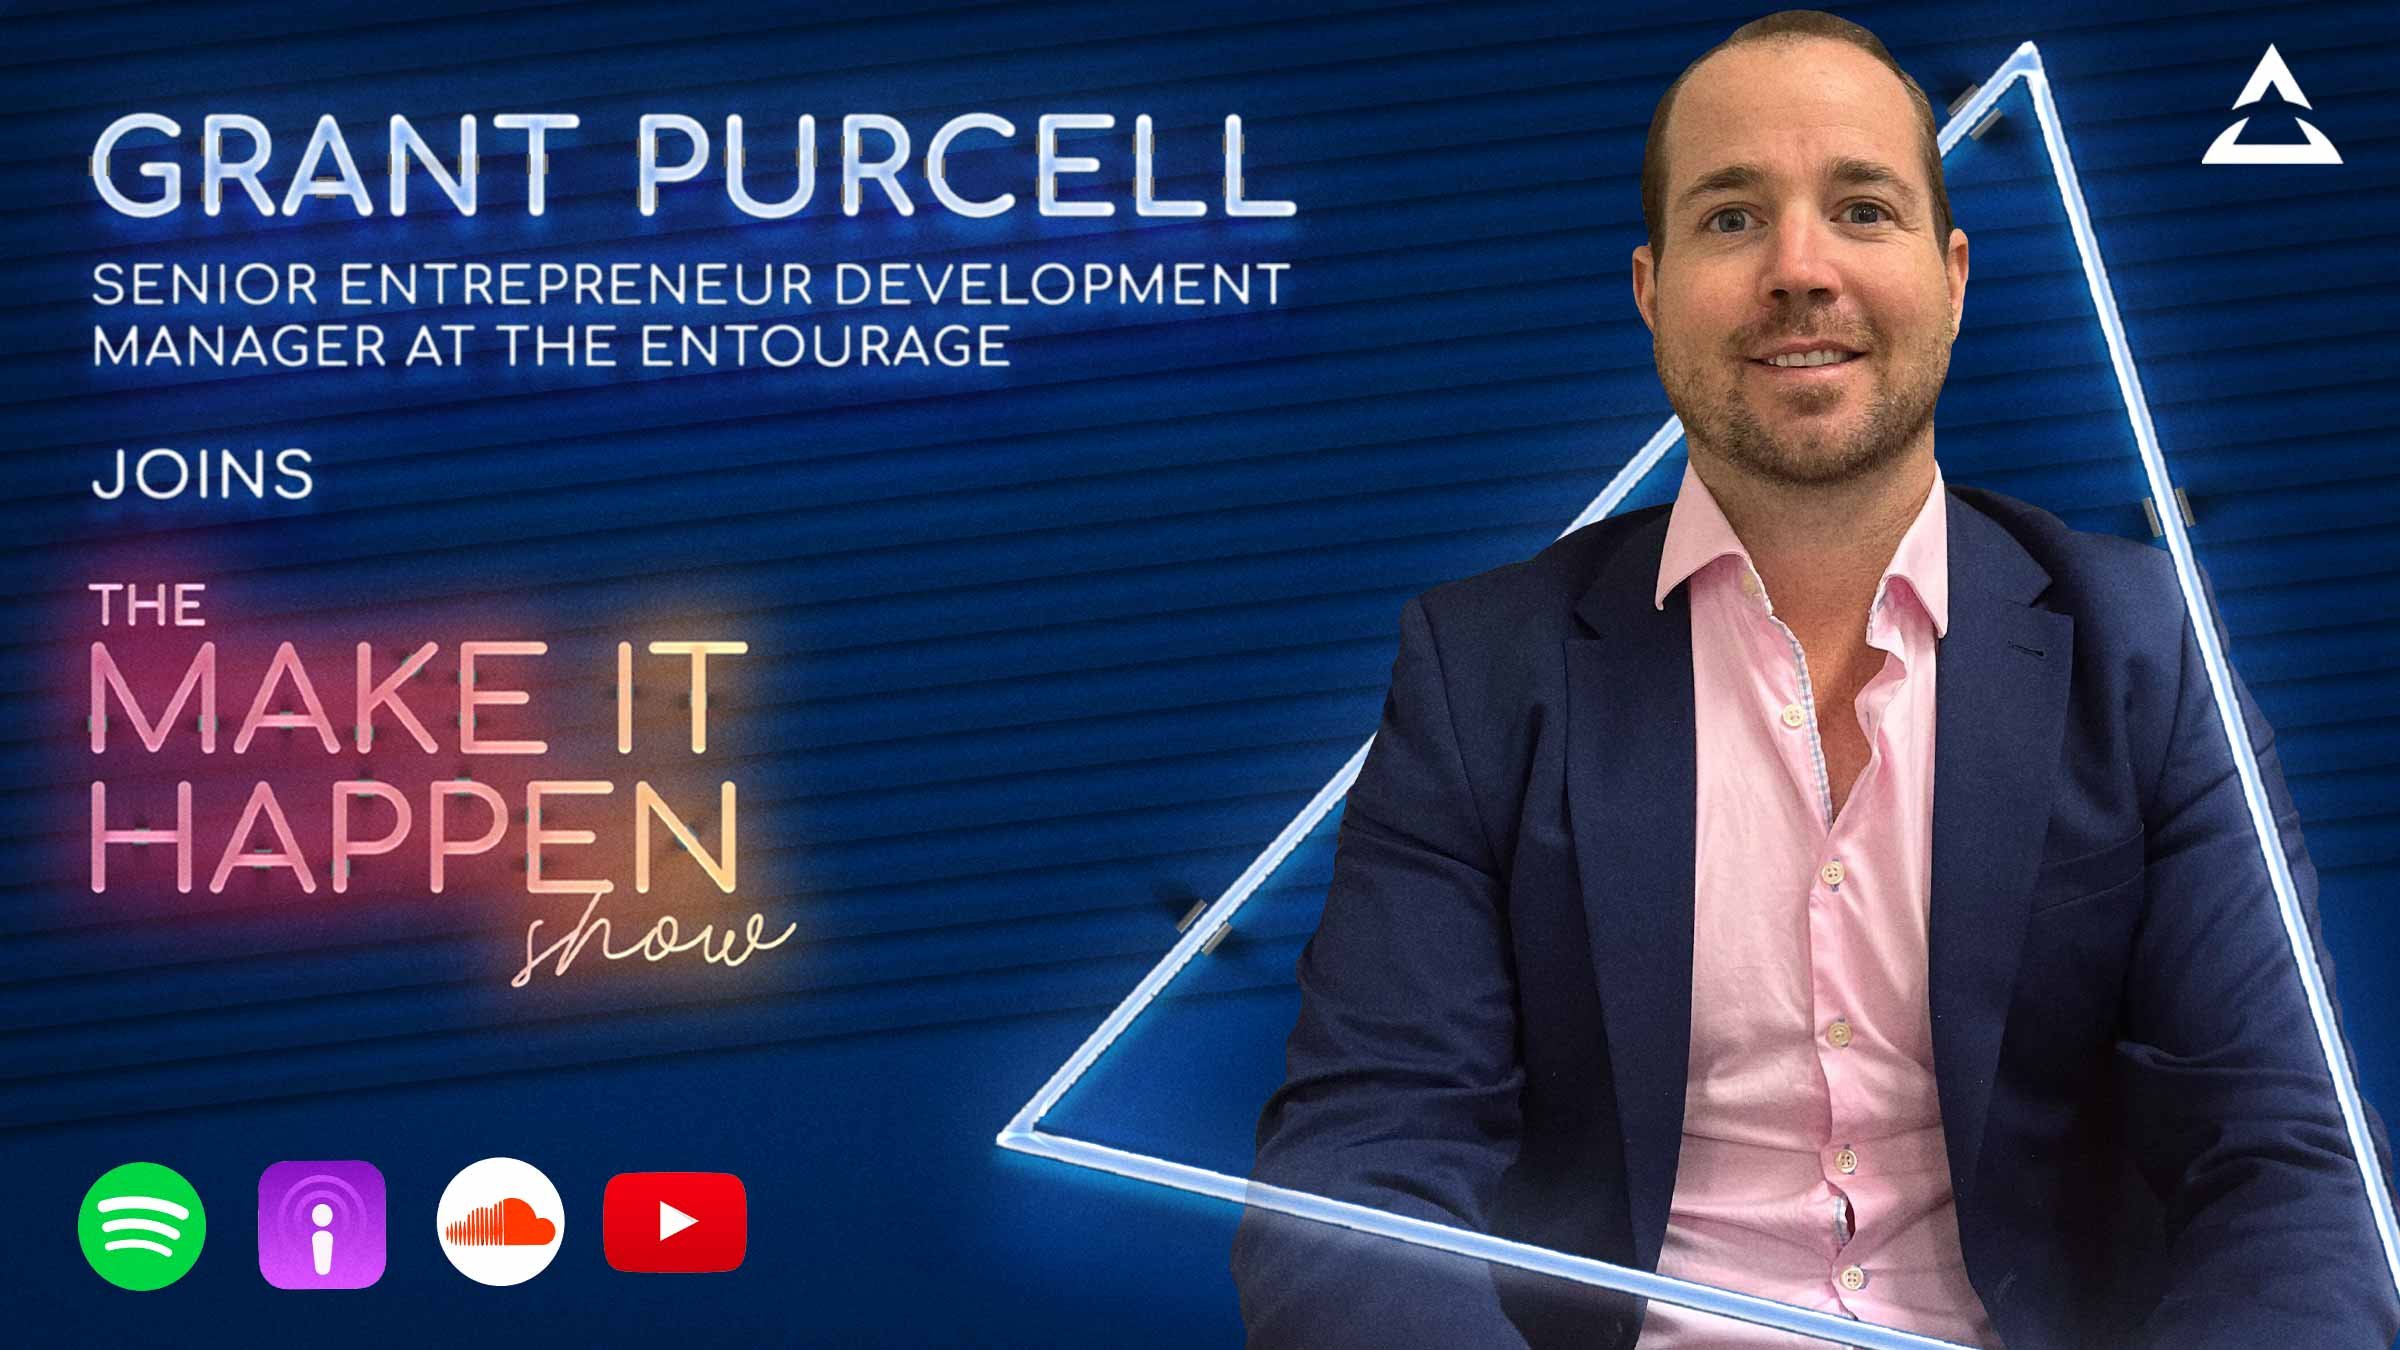 Grant Purcell, Senior Entrepreneur Development Manager at The Entourage joins The Make It Happen Show